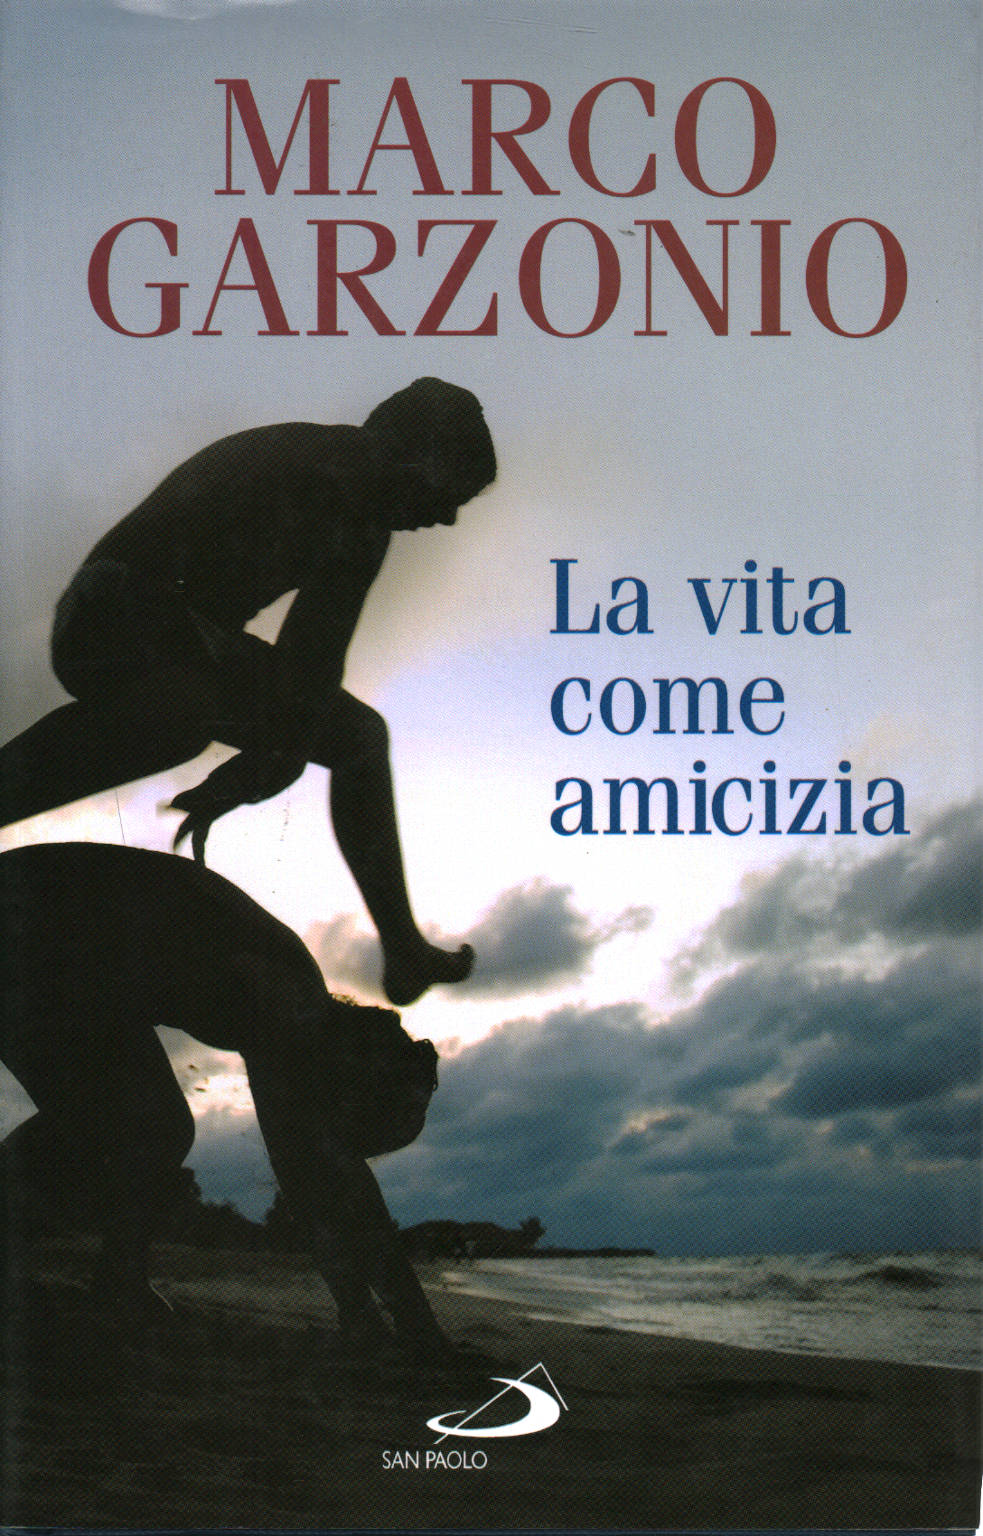 Life as friendship, Marco Garzonio